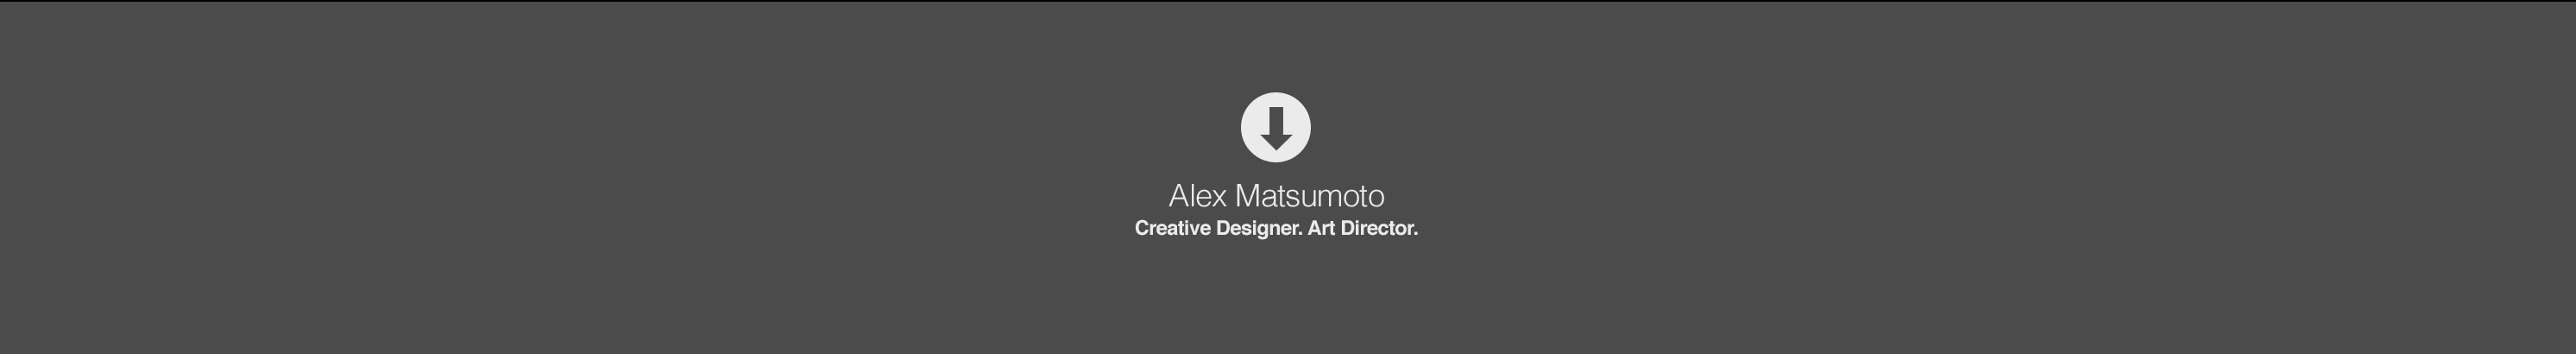 Baner profilu użytkownika Alex Matsumoto